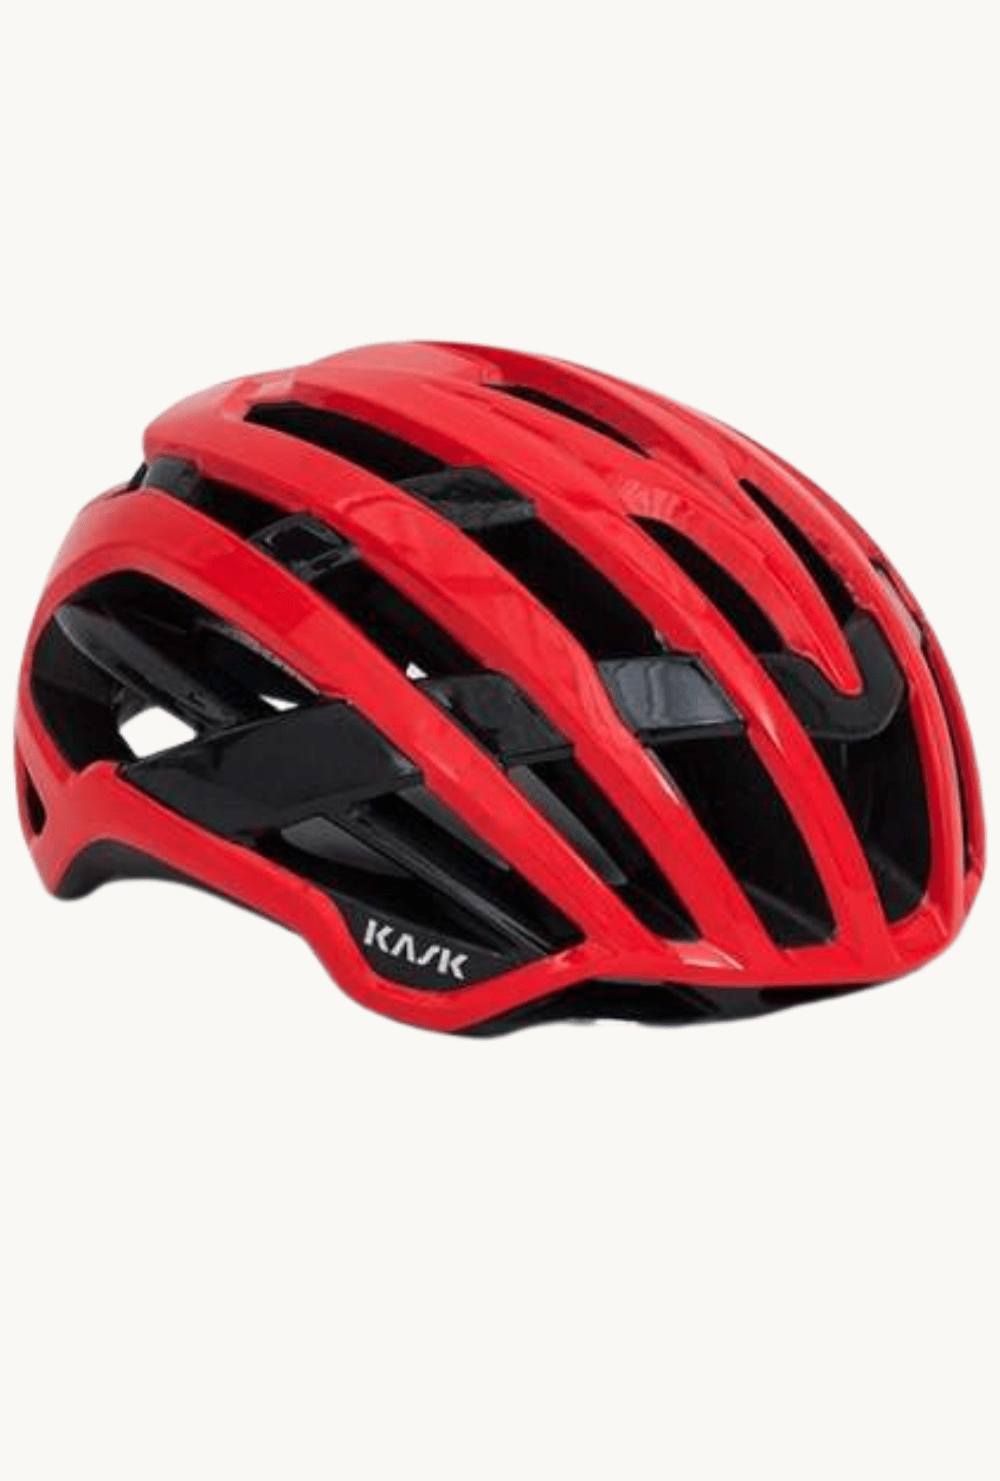 Helmet - Kask Valegro Redlarge / Red